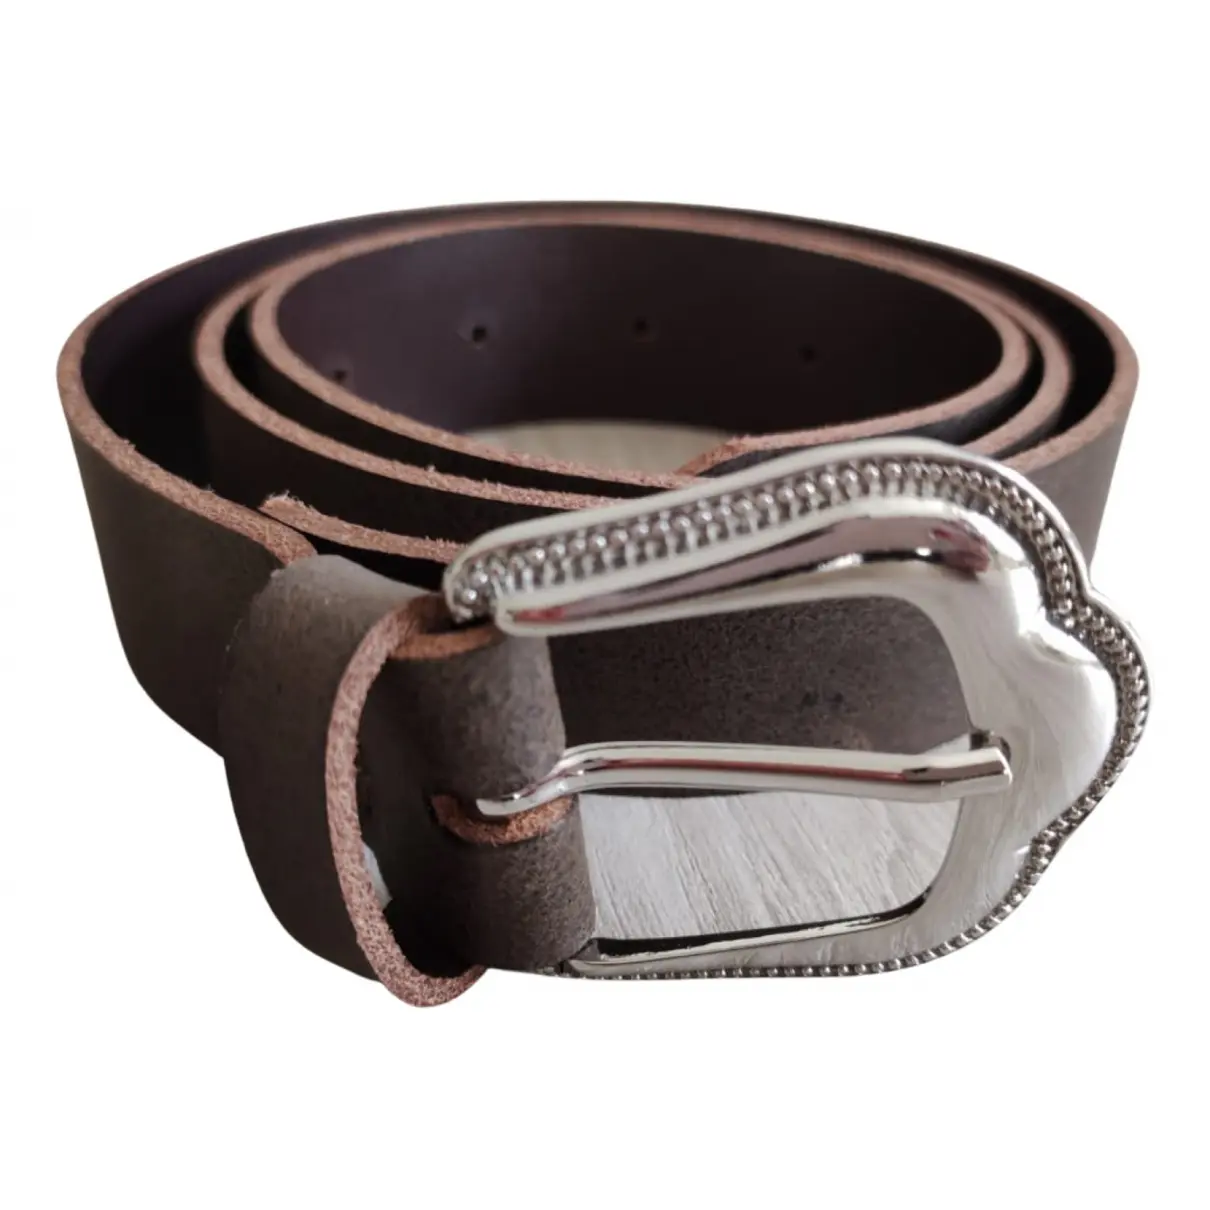 Leather belt Max Mara